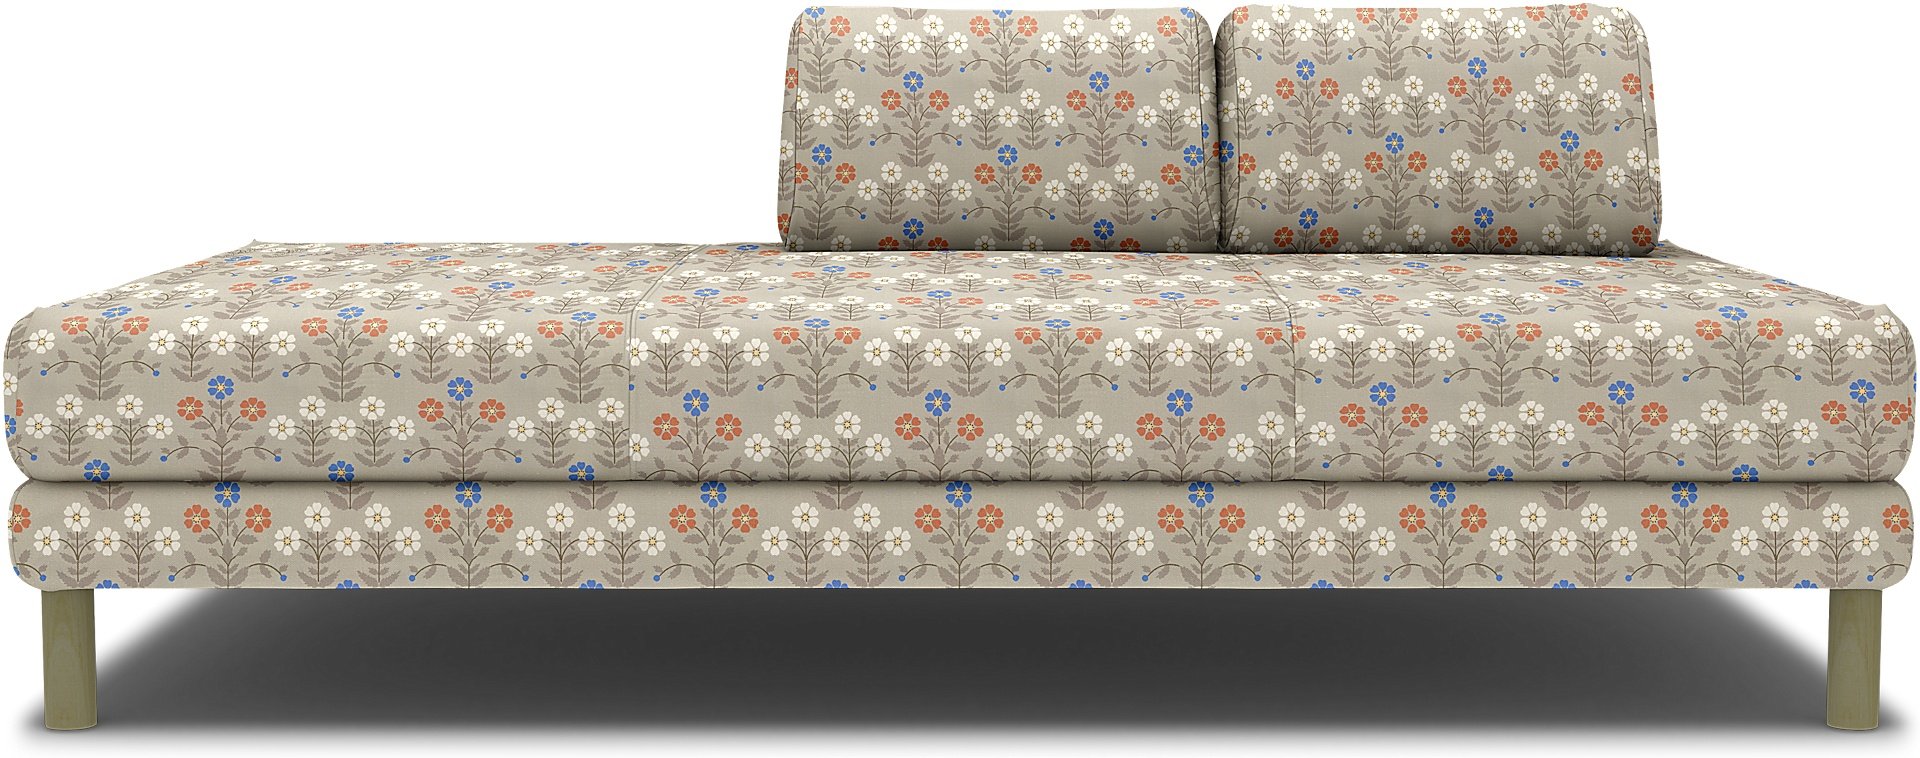 IKEA - Flottebo sofa bed cover 90 cm, Sippor Blue/Orange, BEMZ x BORASTAPETER COLLECTION - Bemz